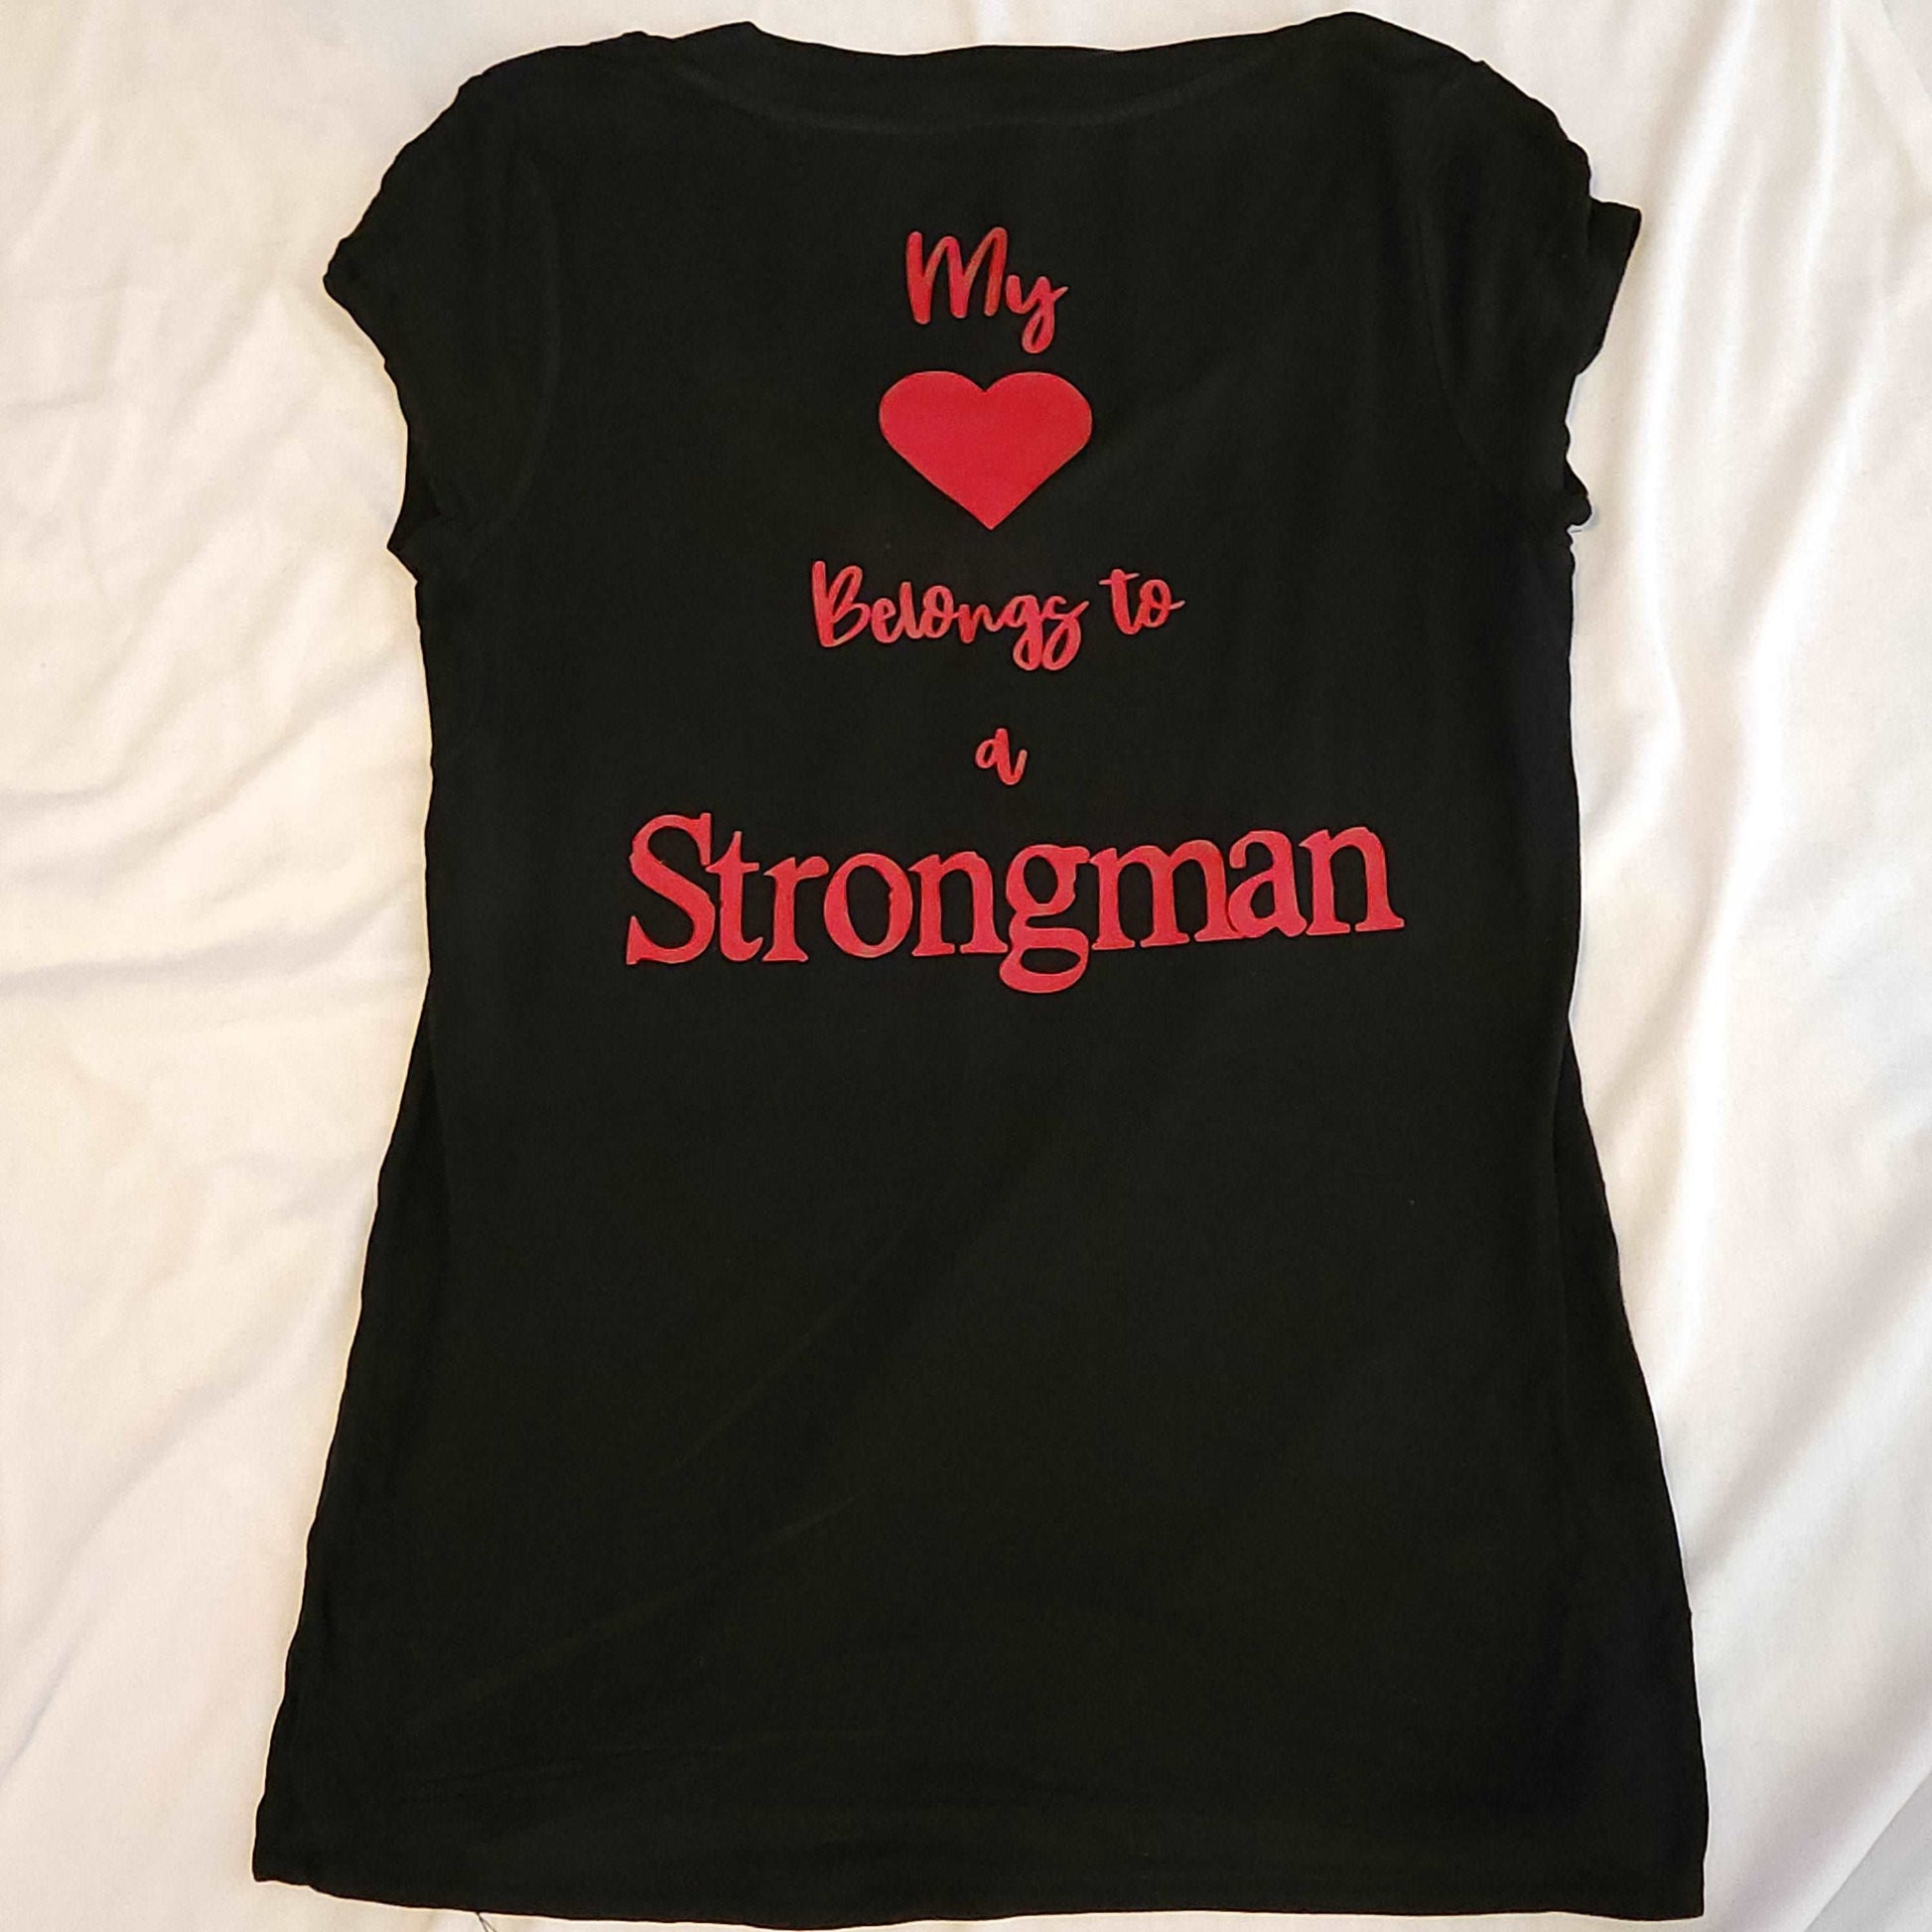 My heart belongs to a strongman black tee shirt